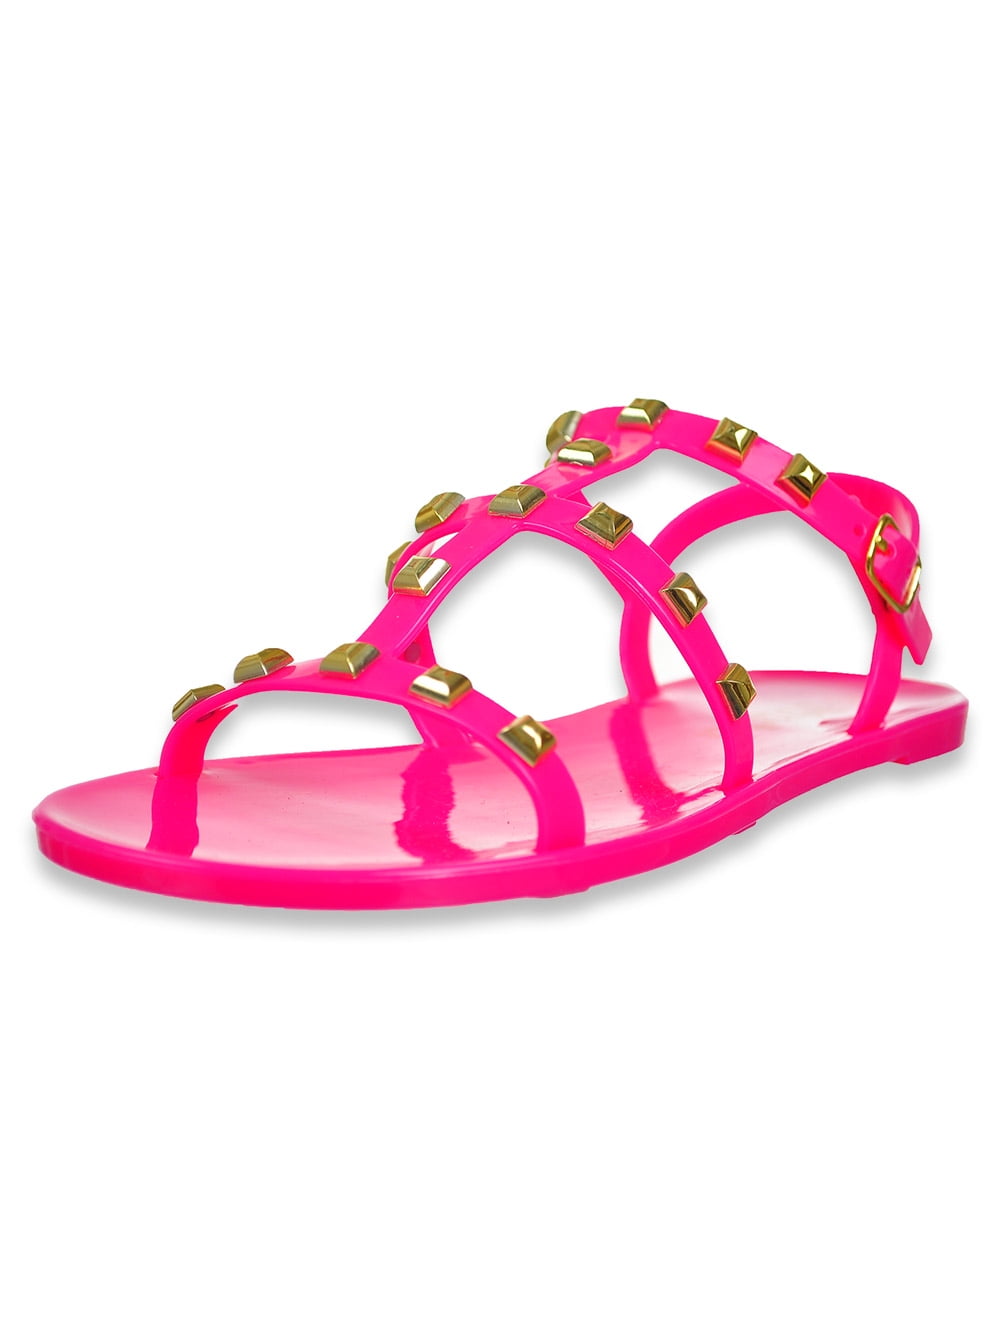 Mudd Girls' Studded Jelly Sandals - fuchsia, 3 youth - Walmart.com